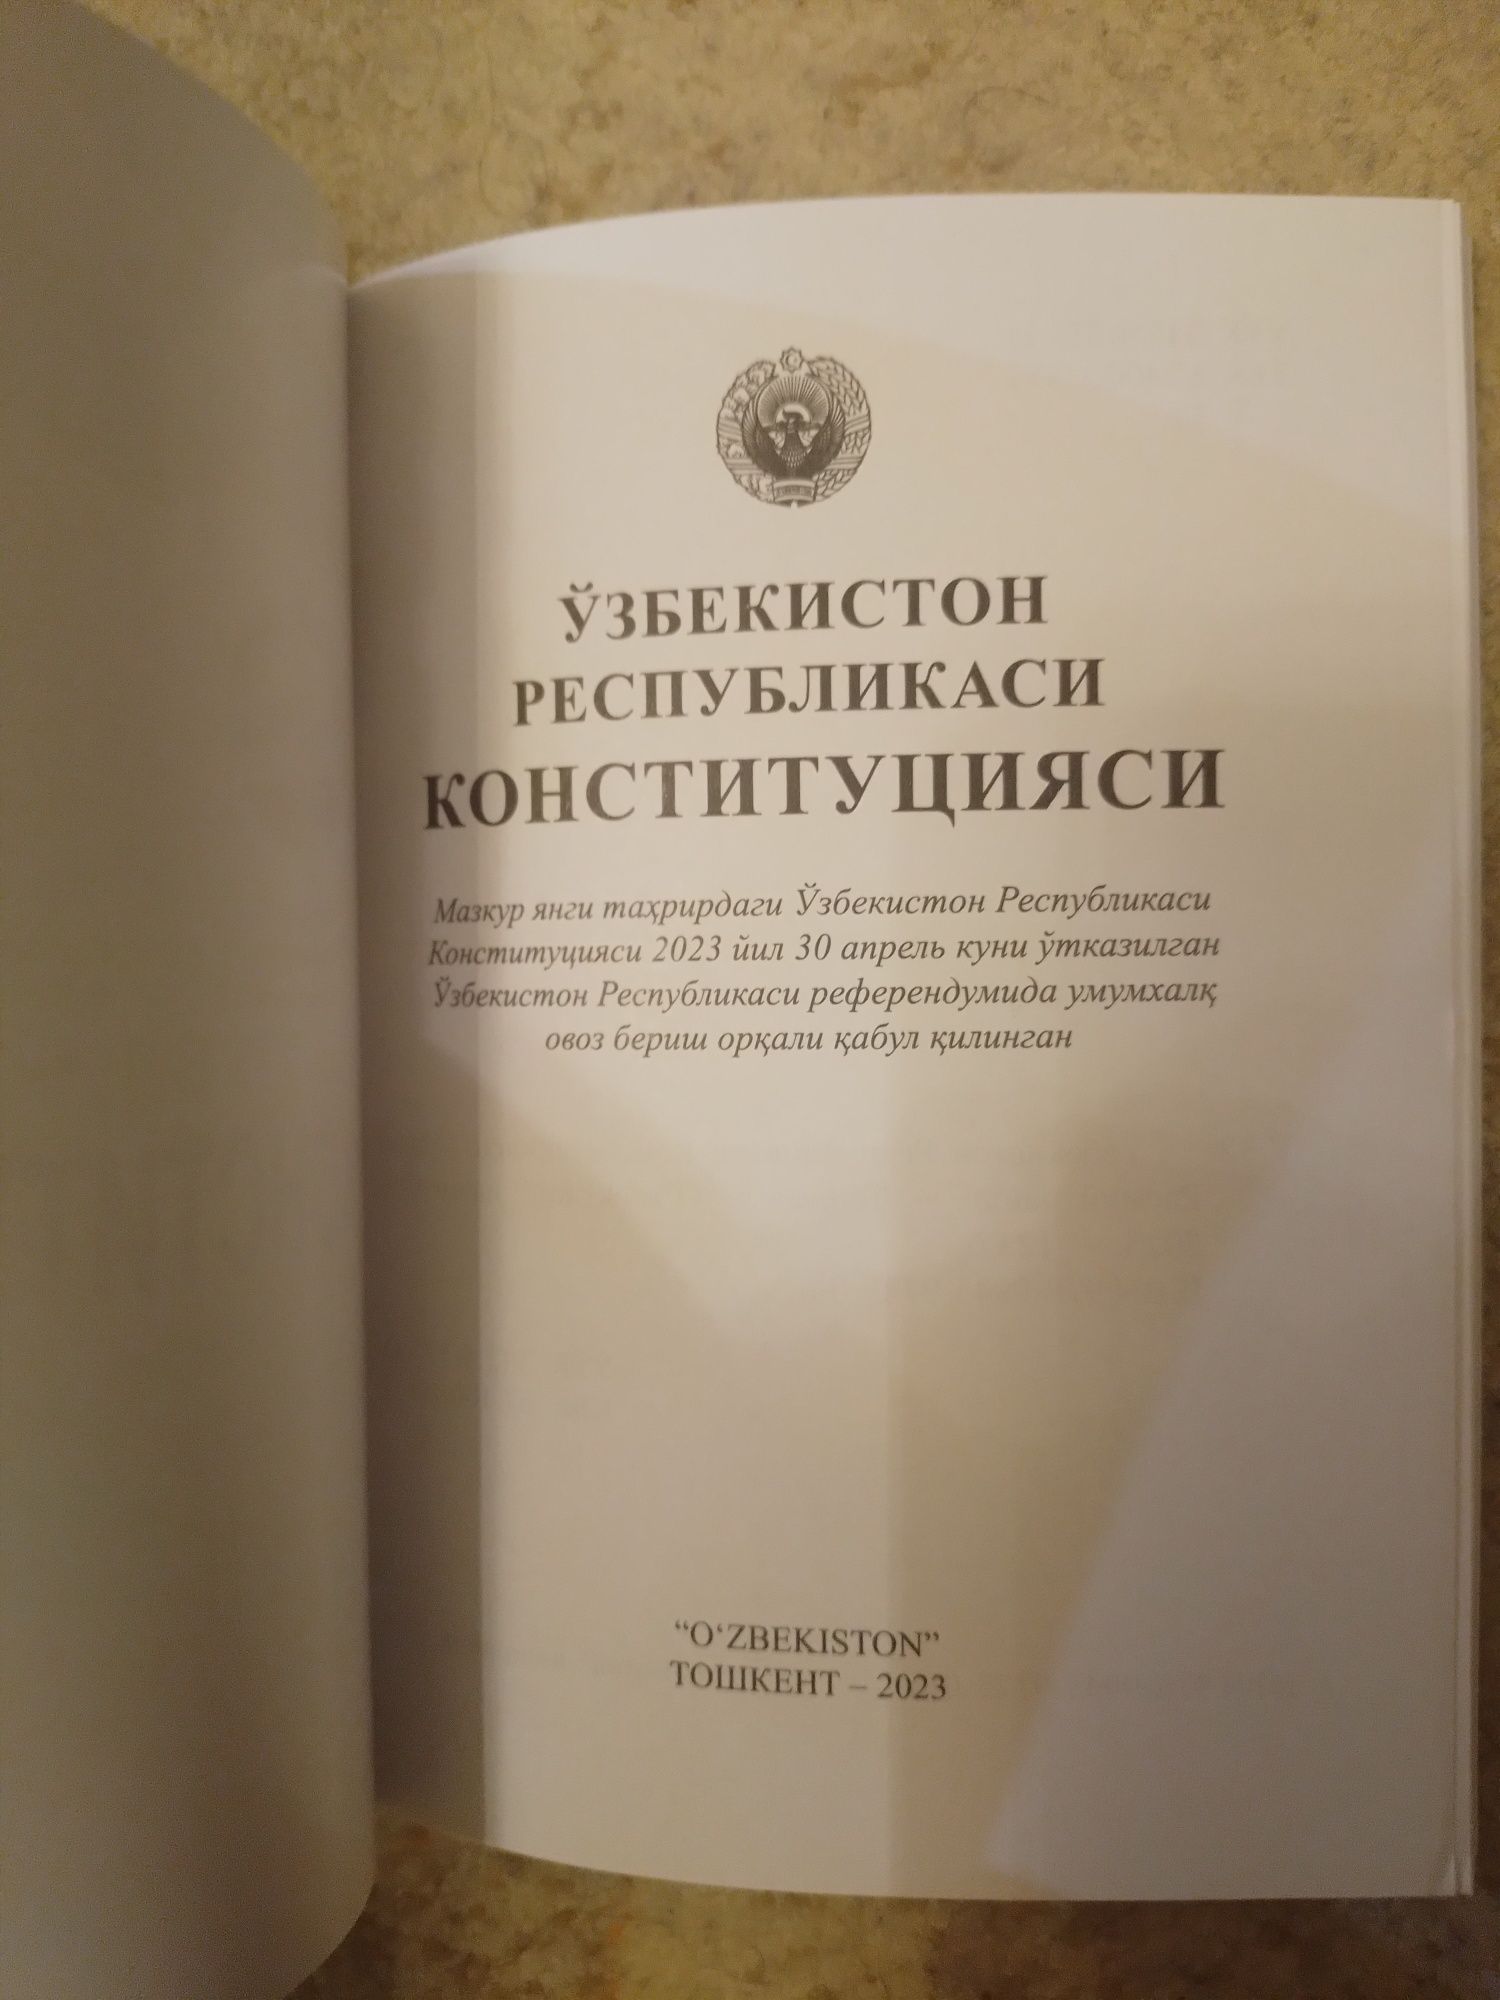 Konstitutsiya Конституция